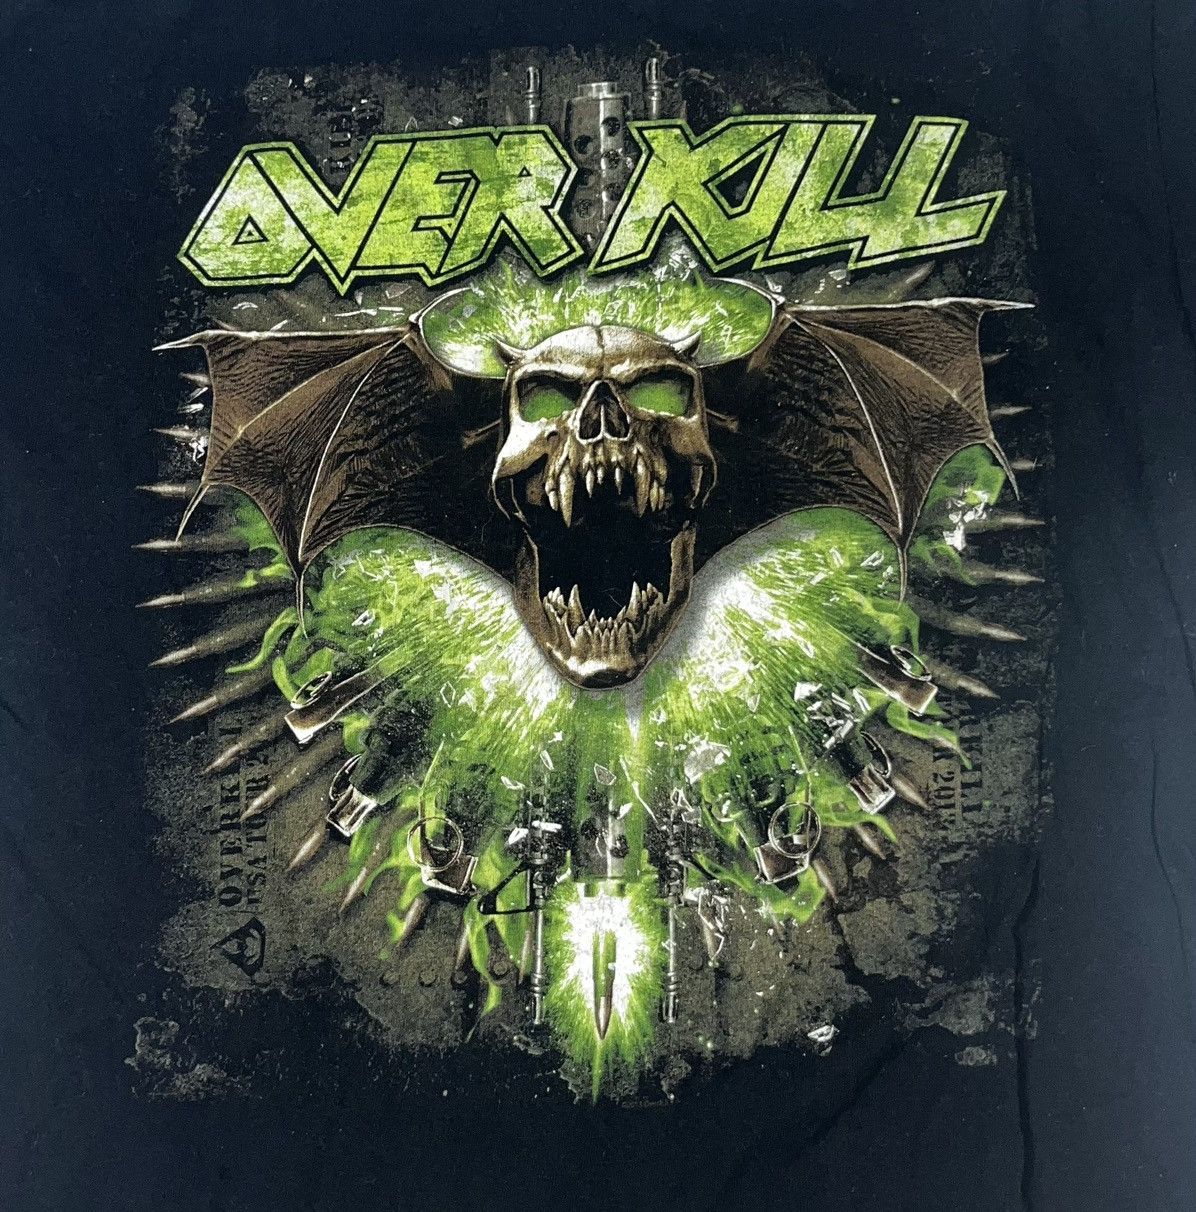 Band Tees Overkill 2013 Official Tour Shirt Size US XL / EU 56 / 4 - 2 Preview